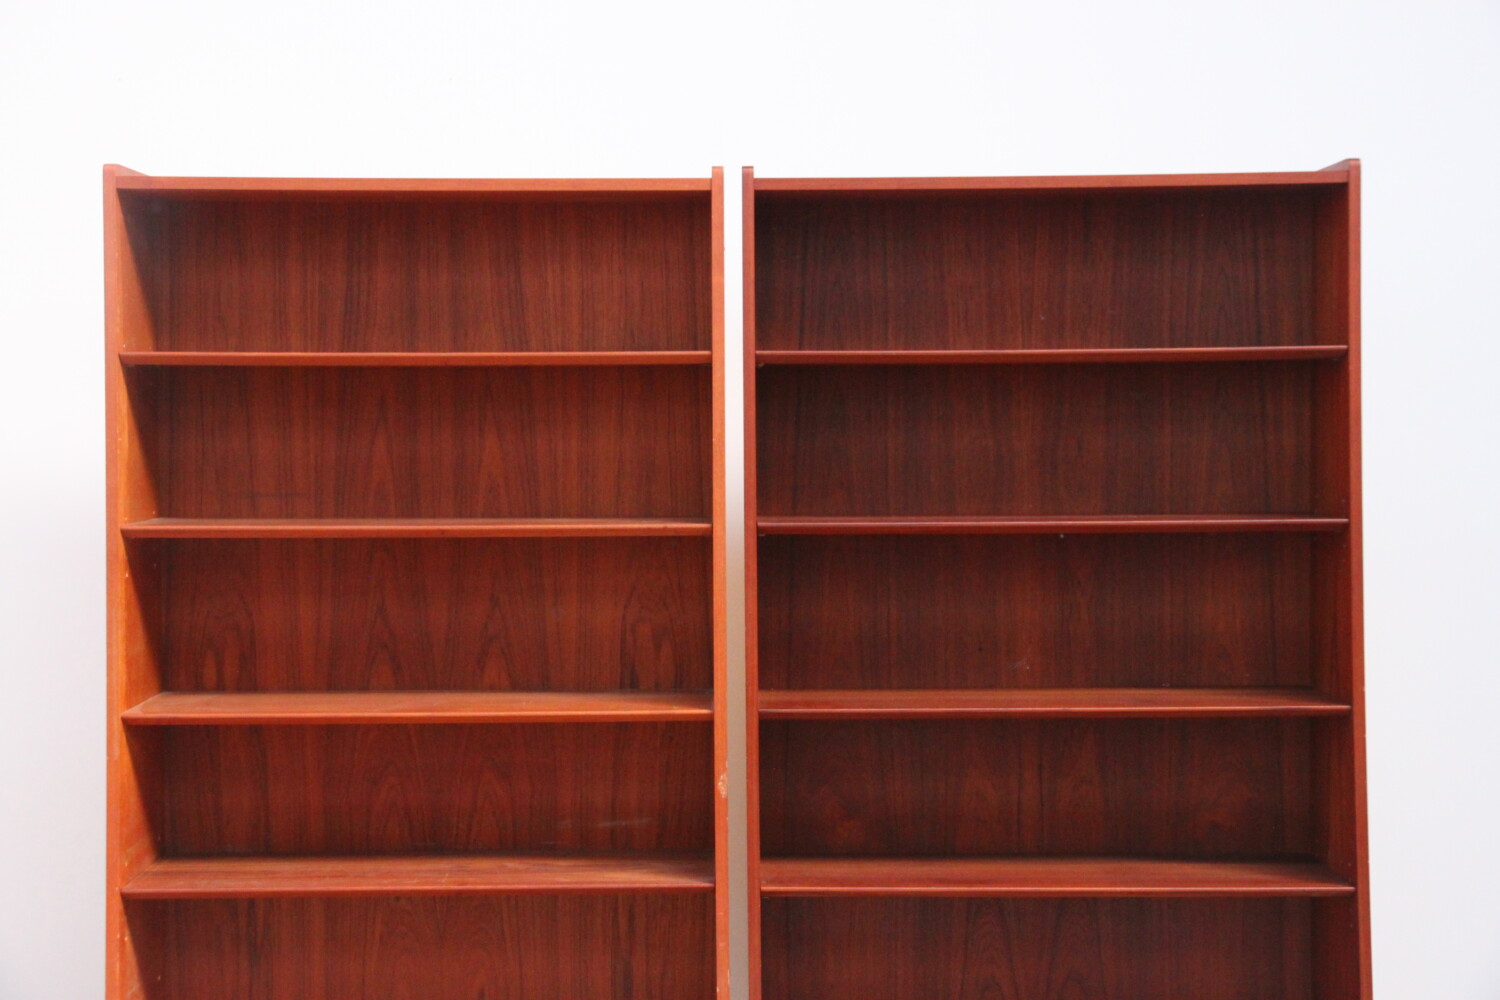 A Pair of Teak Bookcases by Bornholm Mobelfabrik